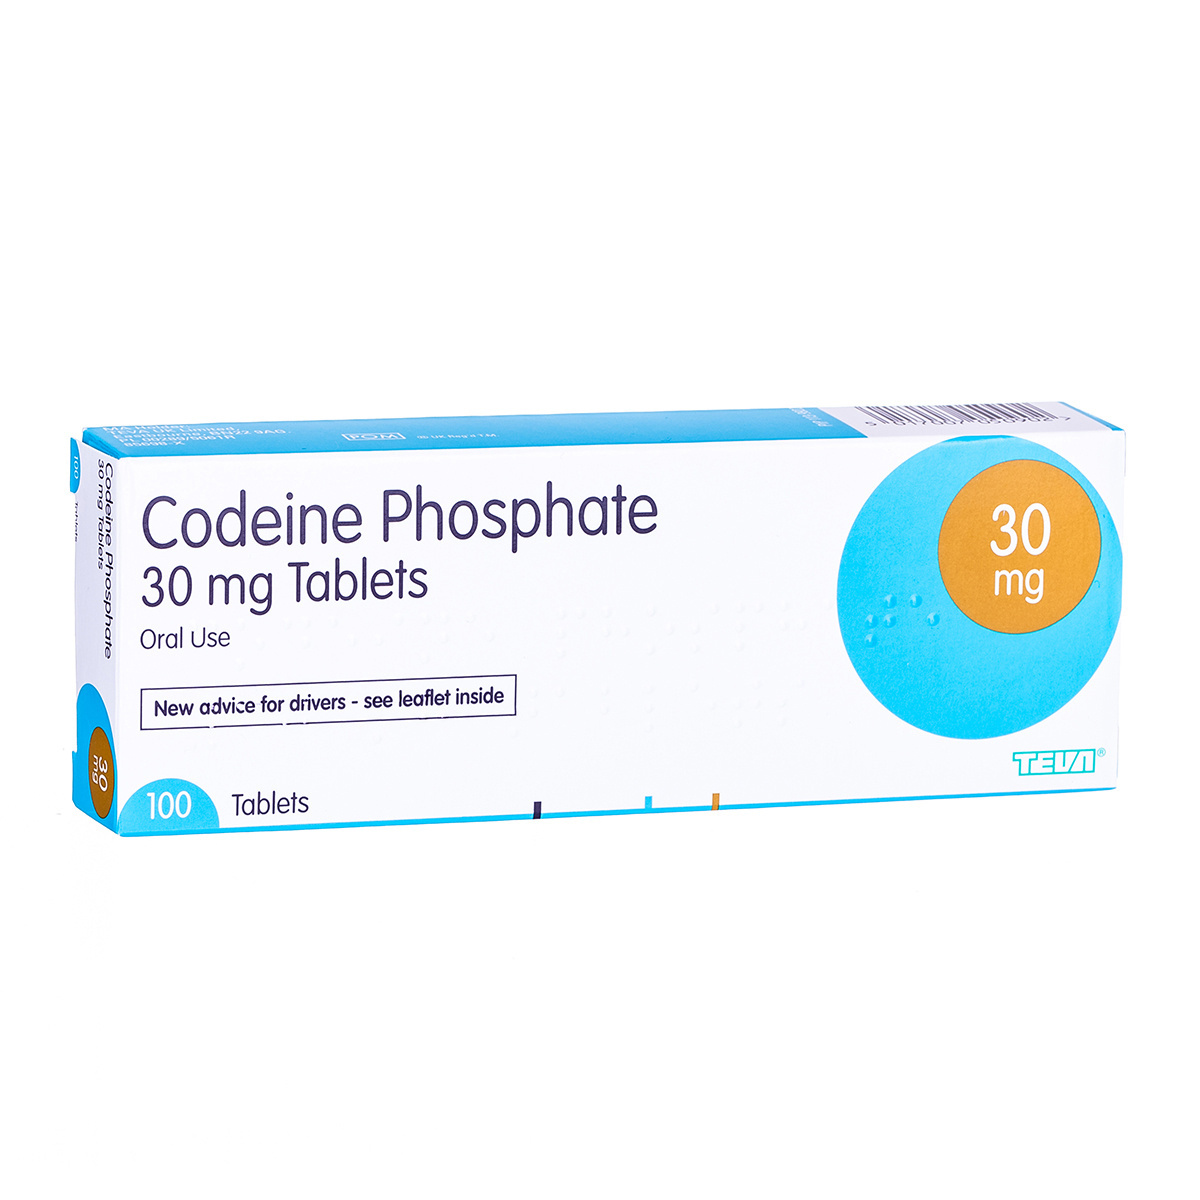 Acquista codeina 30 mg